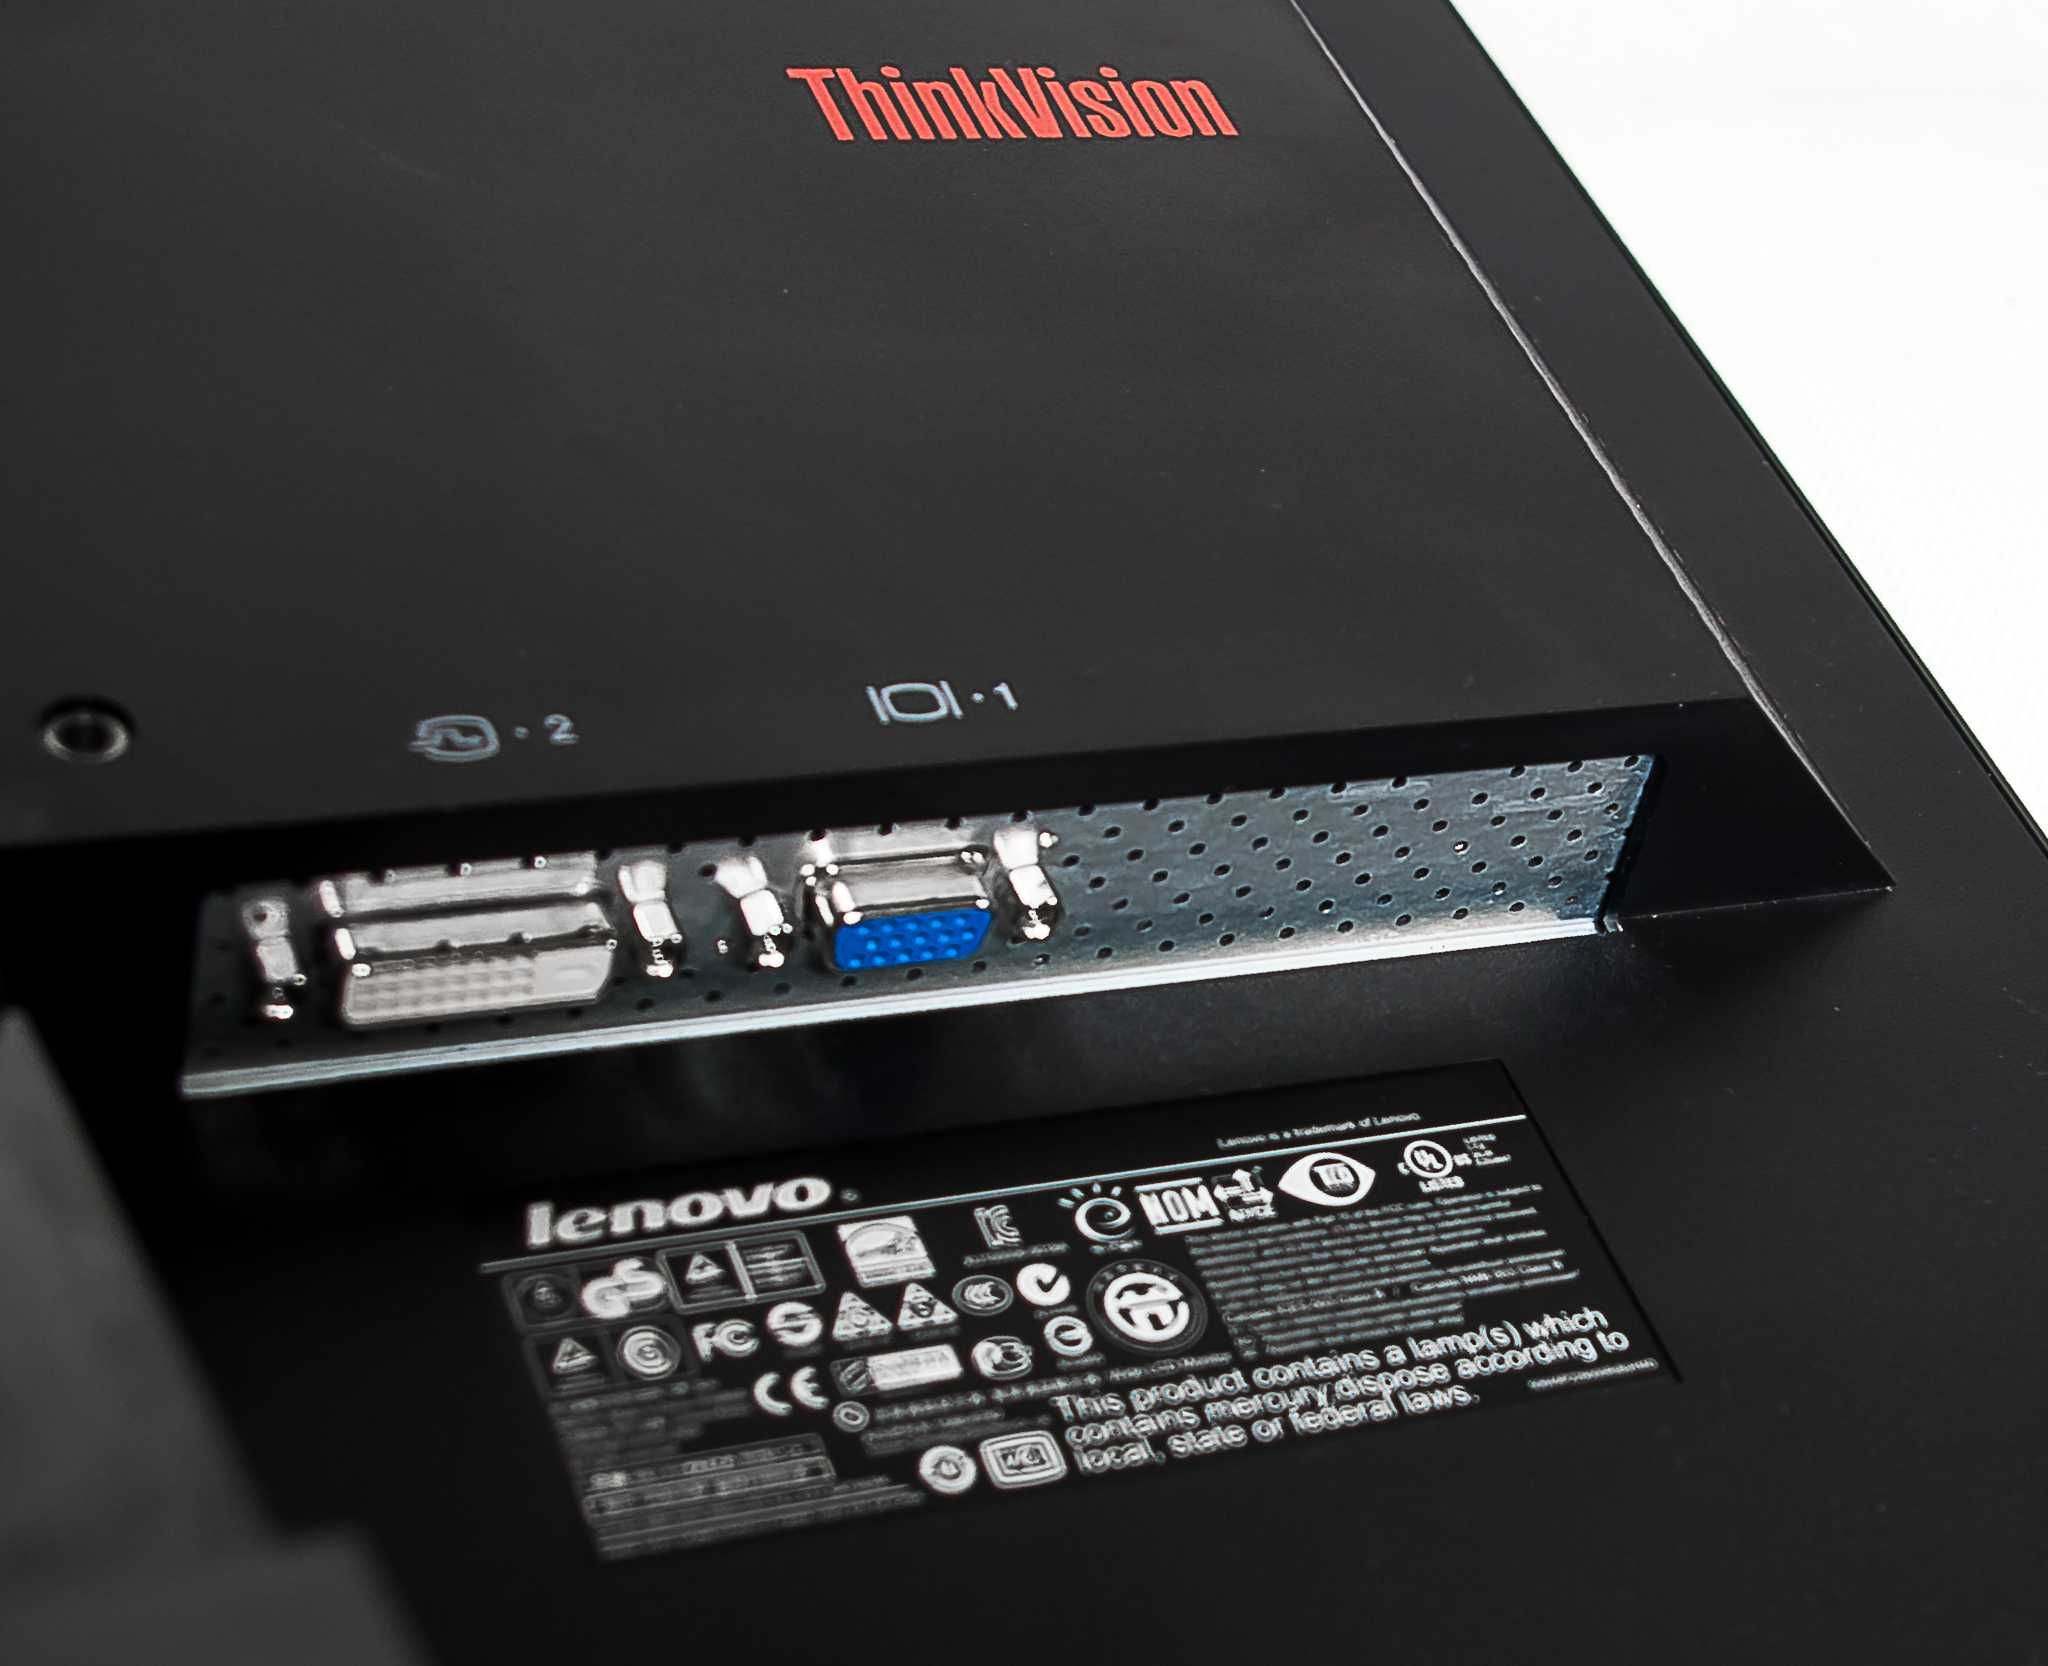 Monitor Lenovo ThinkVision L2250pwD DVI VGA LCD TN 22" PS XBOX